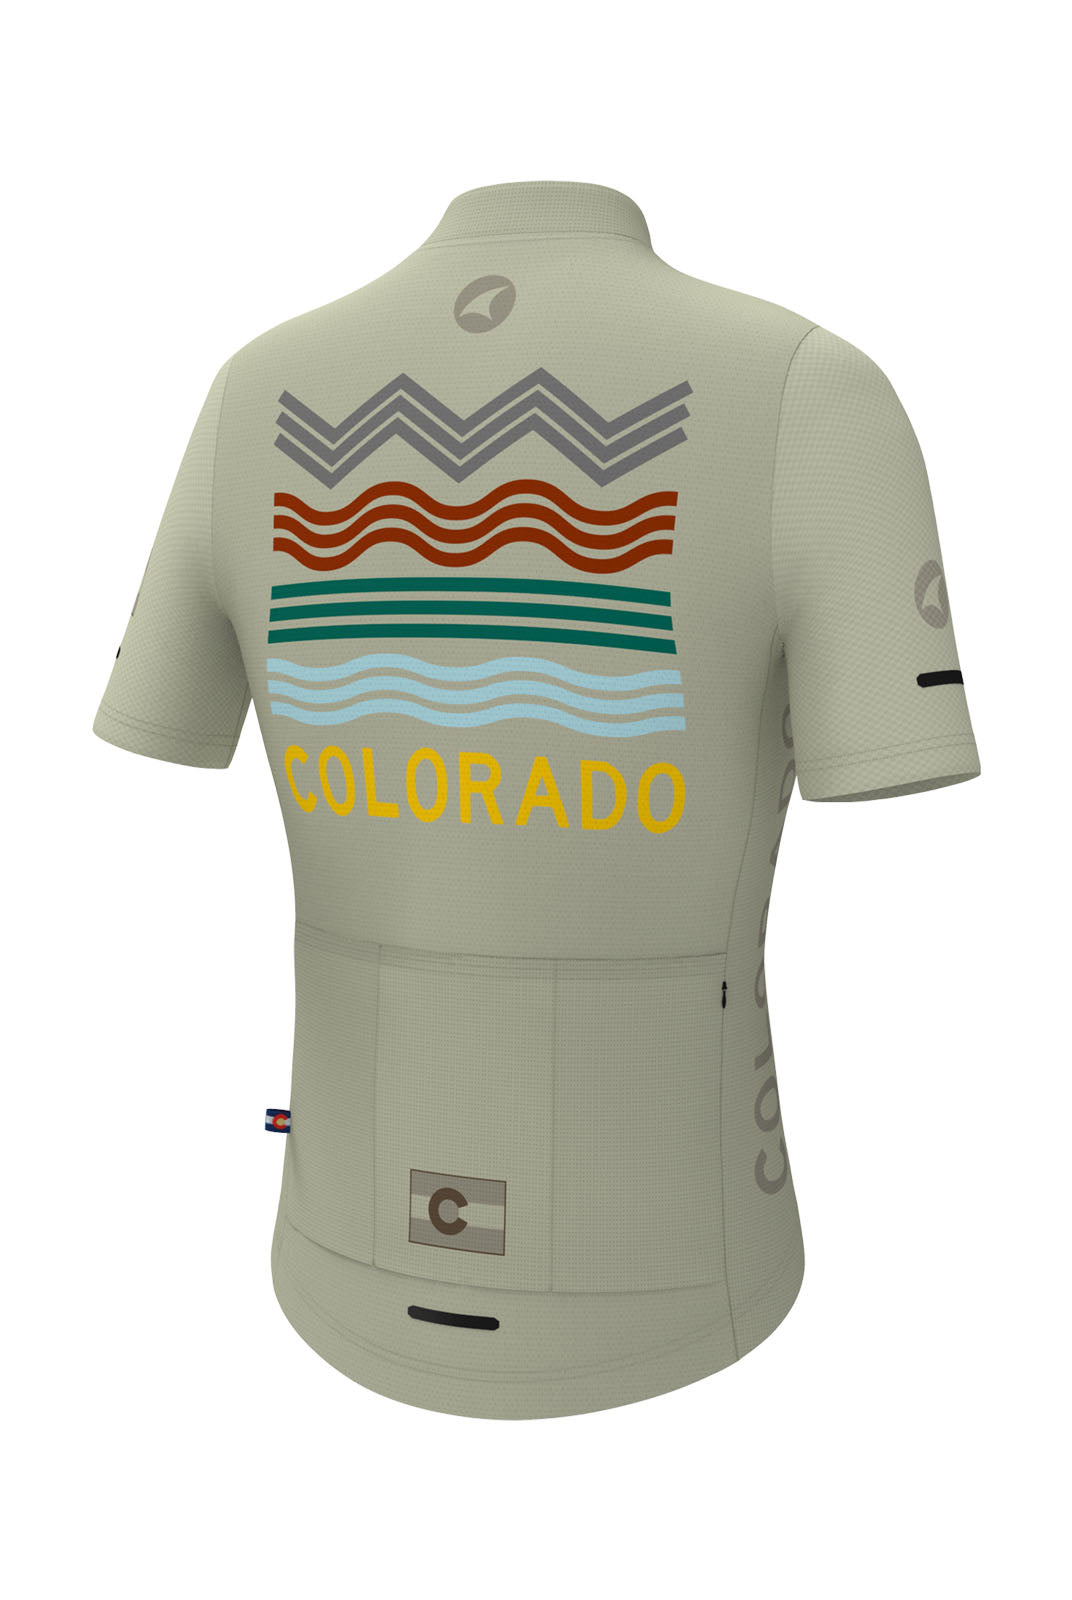 Women's White Colorado Cycling Jersey - Back View